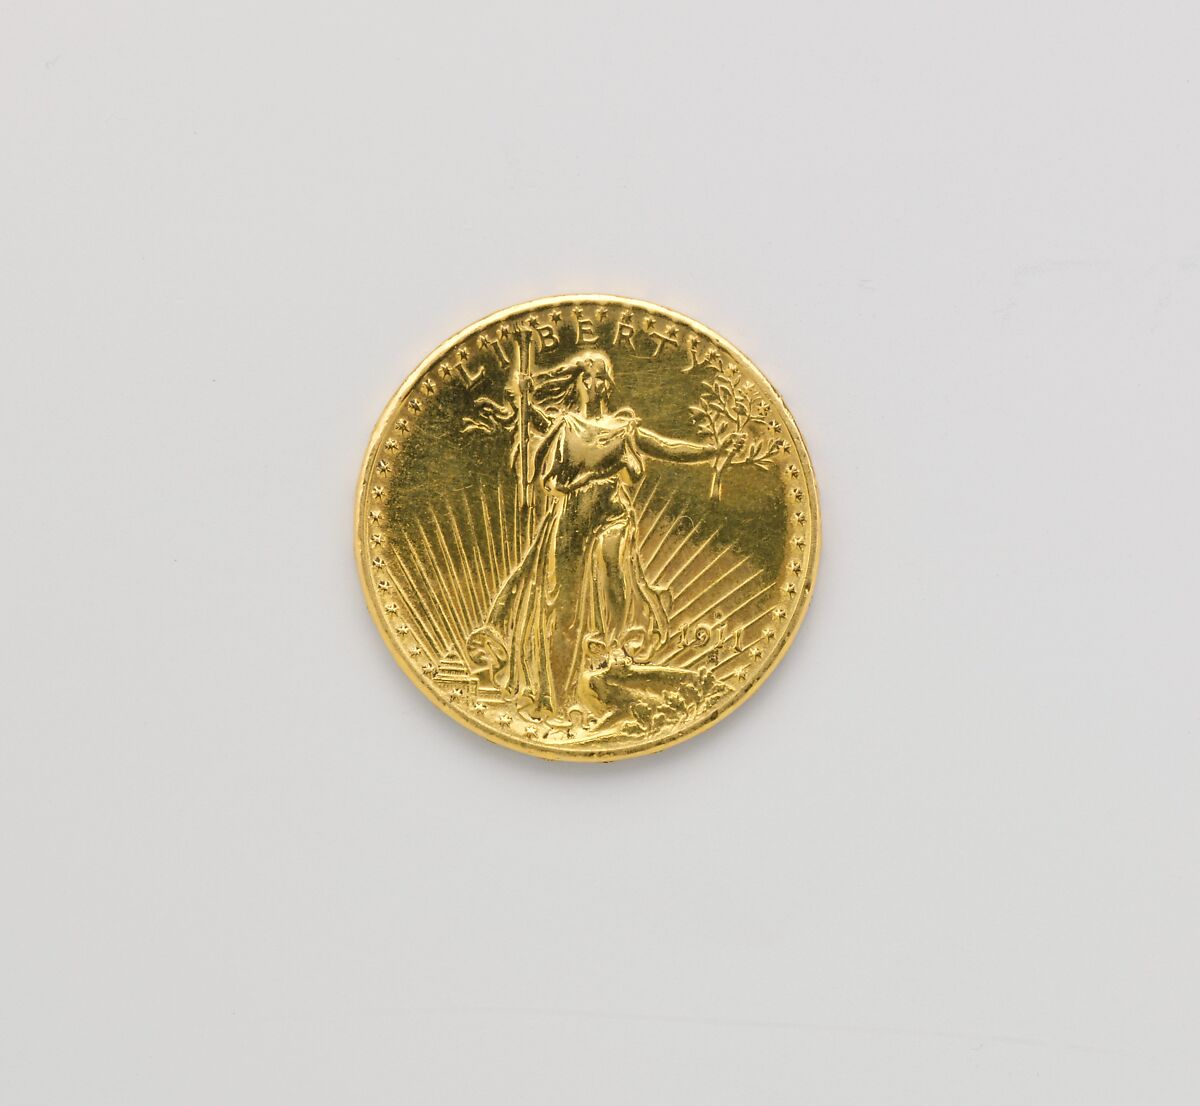 United States Twenty-dollar Gold Piece, Augustus Saint-Gaudens (American, Dublin 1848–1907 Cornish, New Hampshire), Gold 